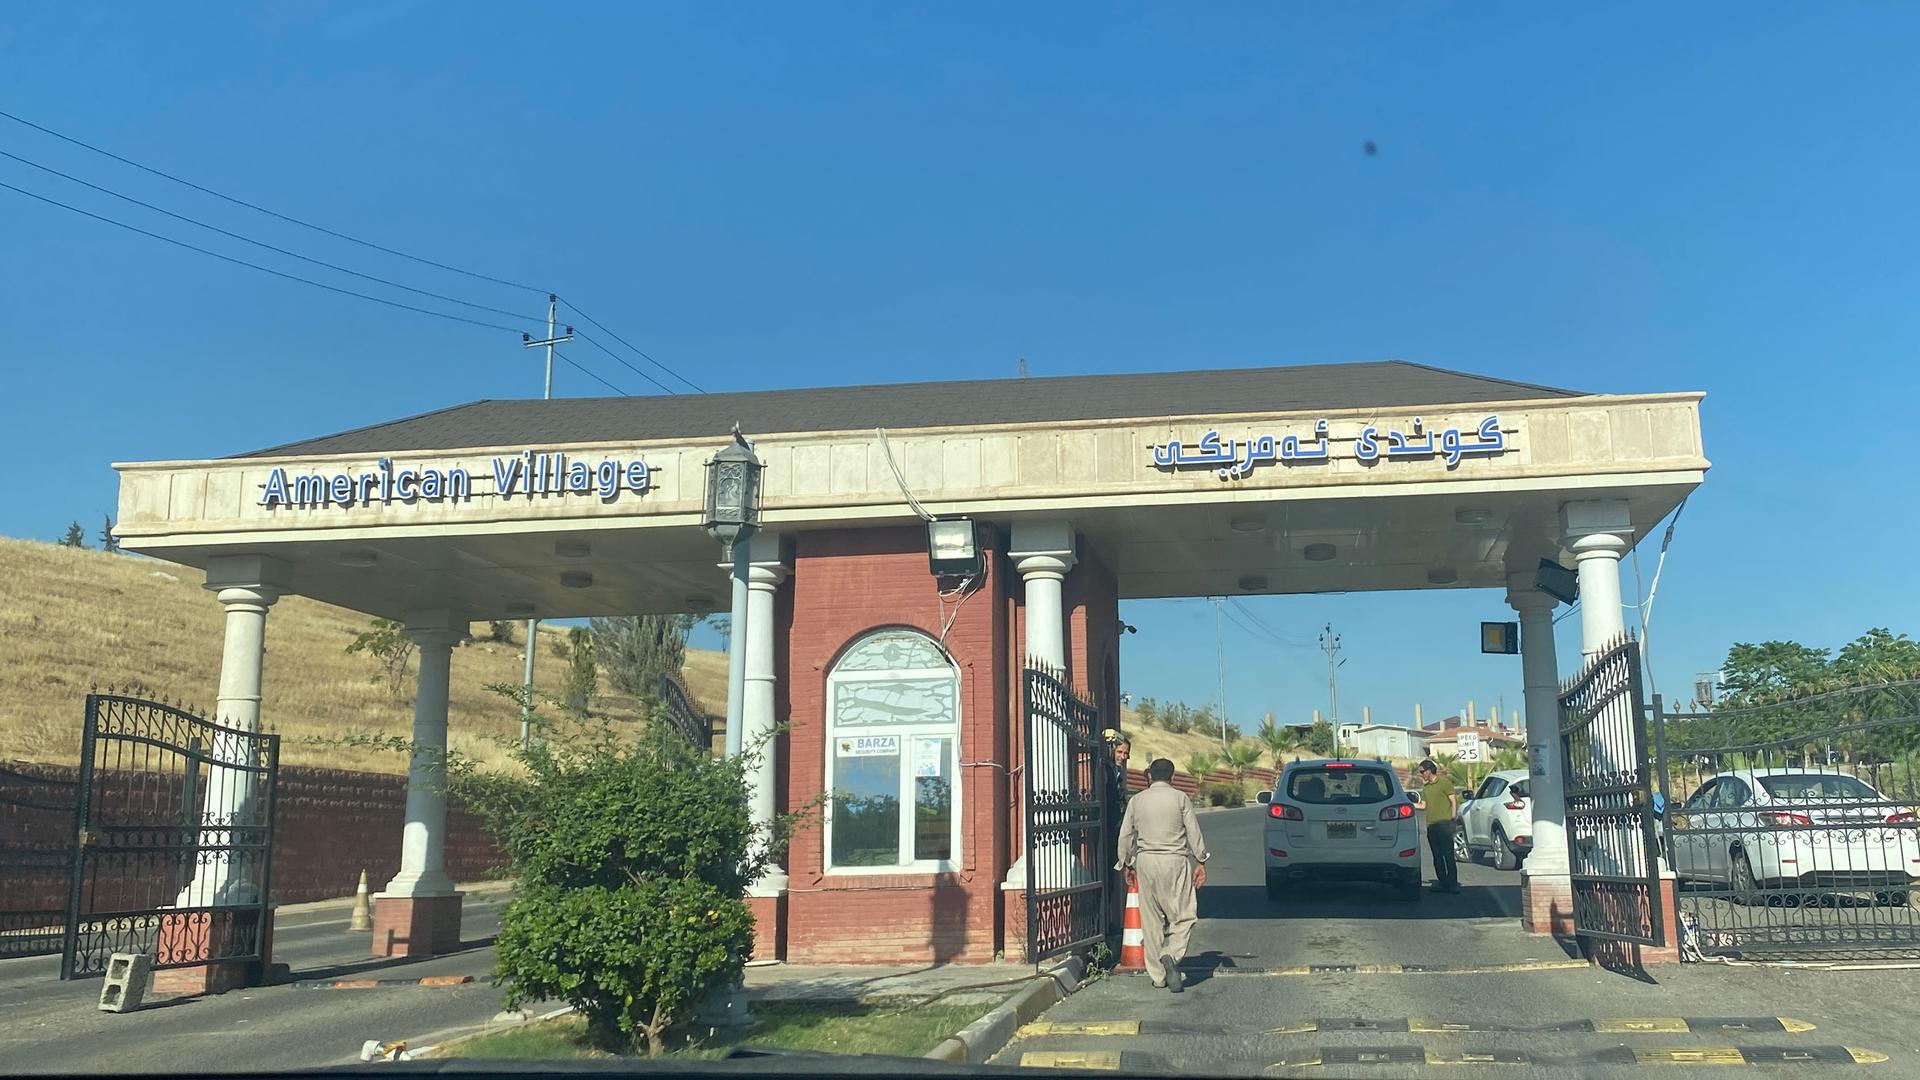 American Village entrance gates on the outskirts of Erbil, Iraq, the Kurdish defacto capital. 